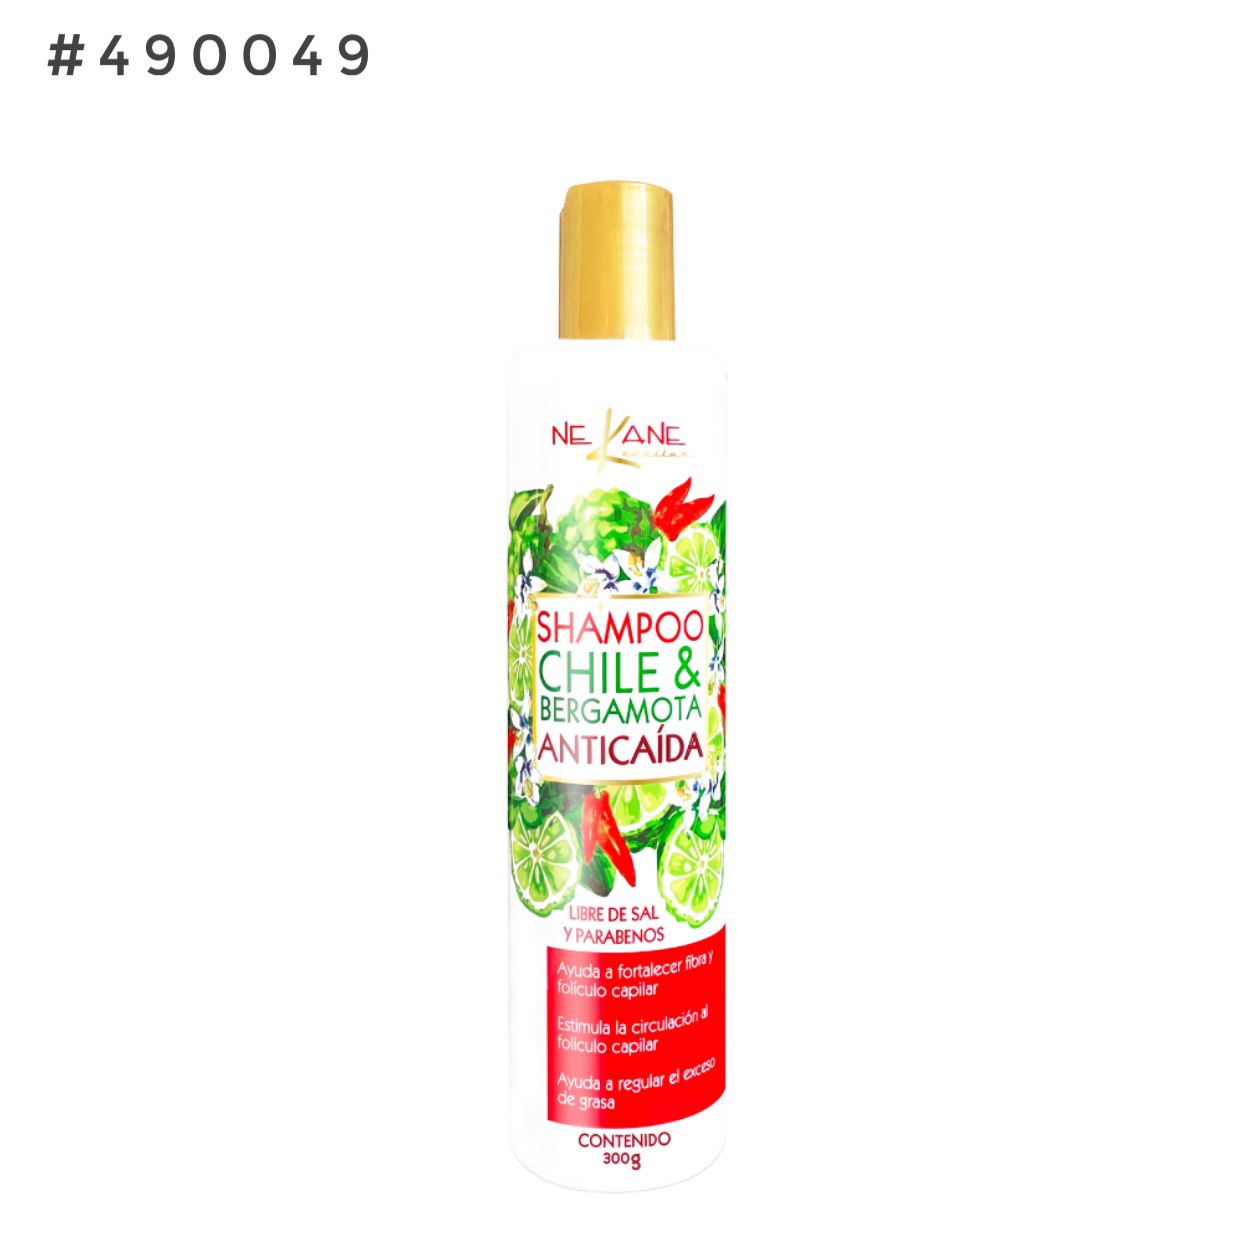 Shampoo de chile y bergamota 490049 nekane